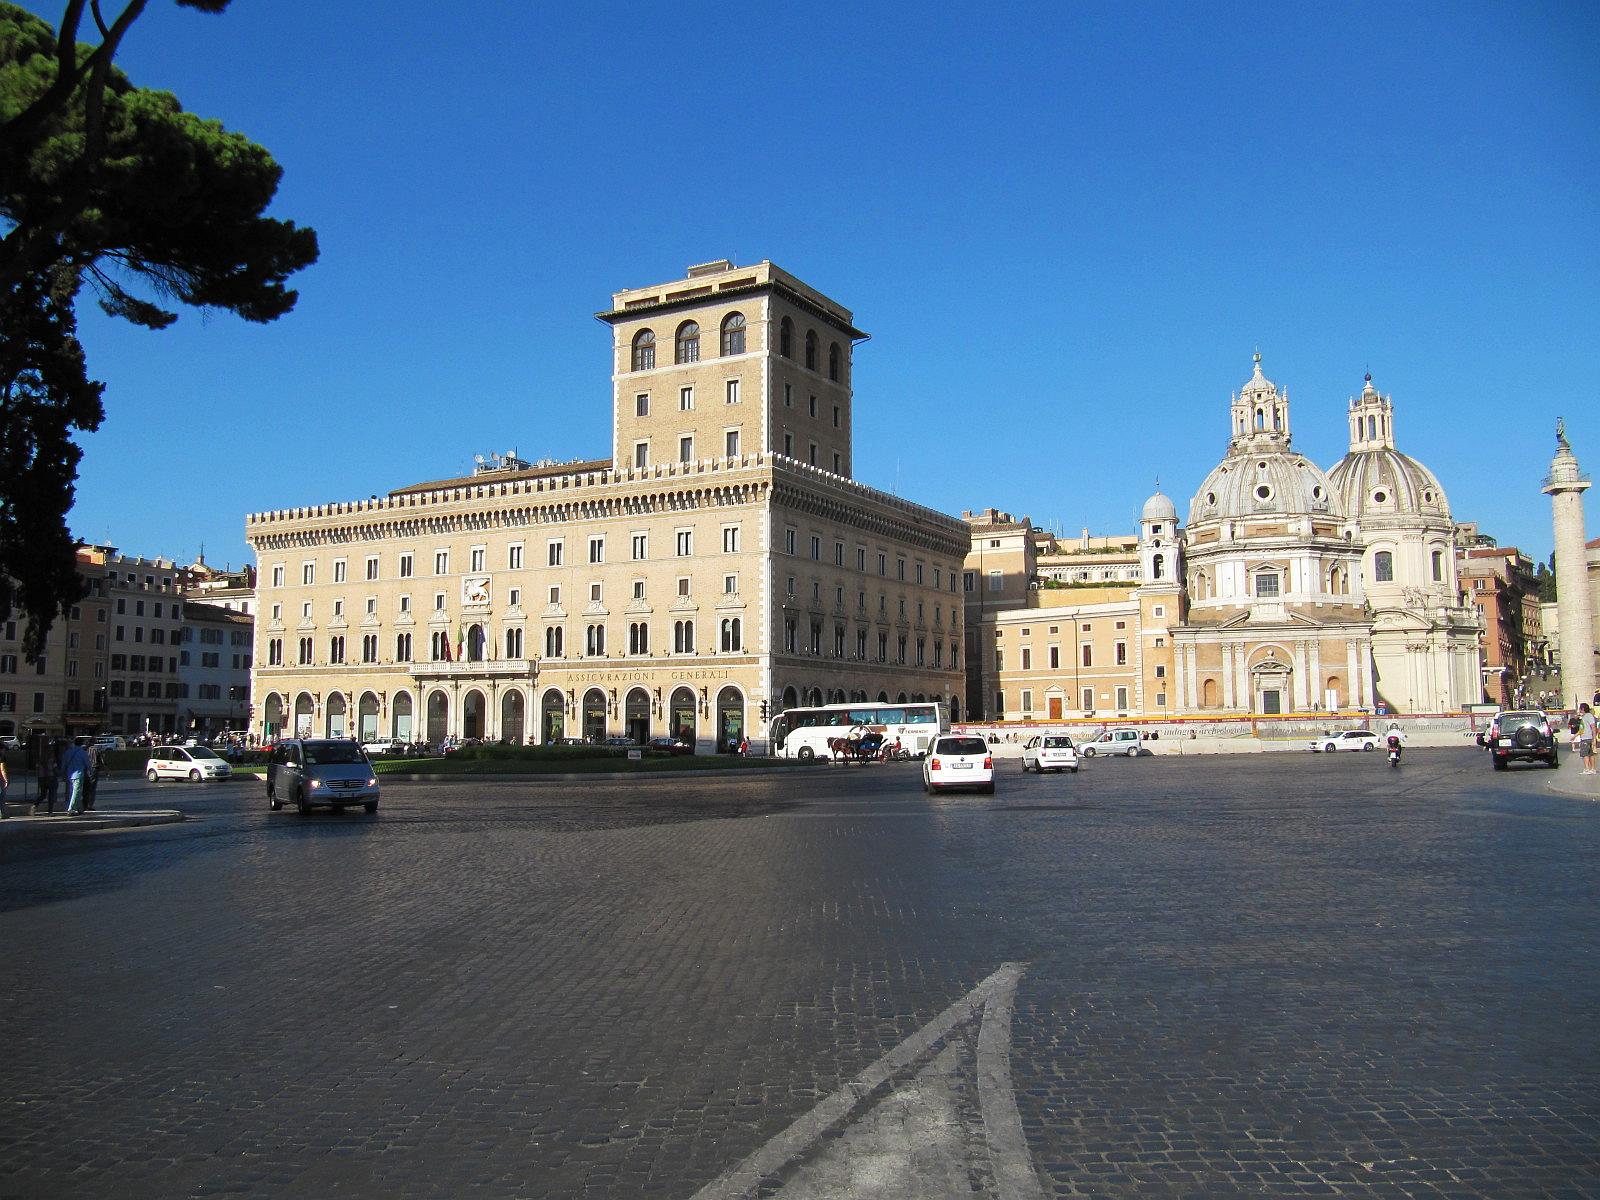 Italy - Rome: Piazza Venezia